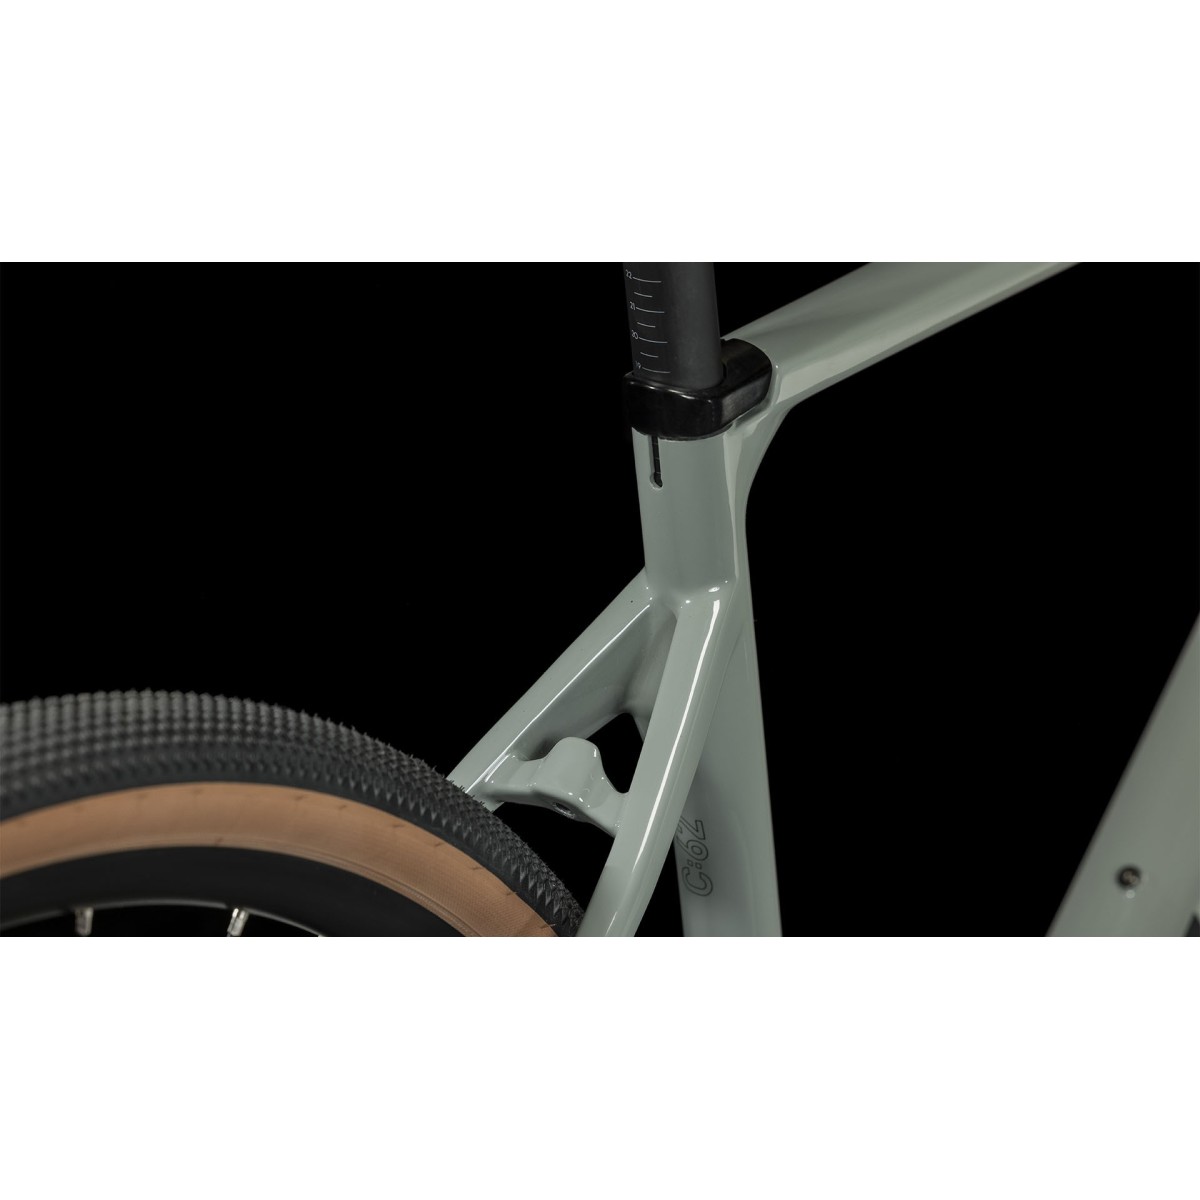 CUBE NUROAD C:62 PRO gravel velosipēds - swampgrey/black - 2023